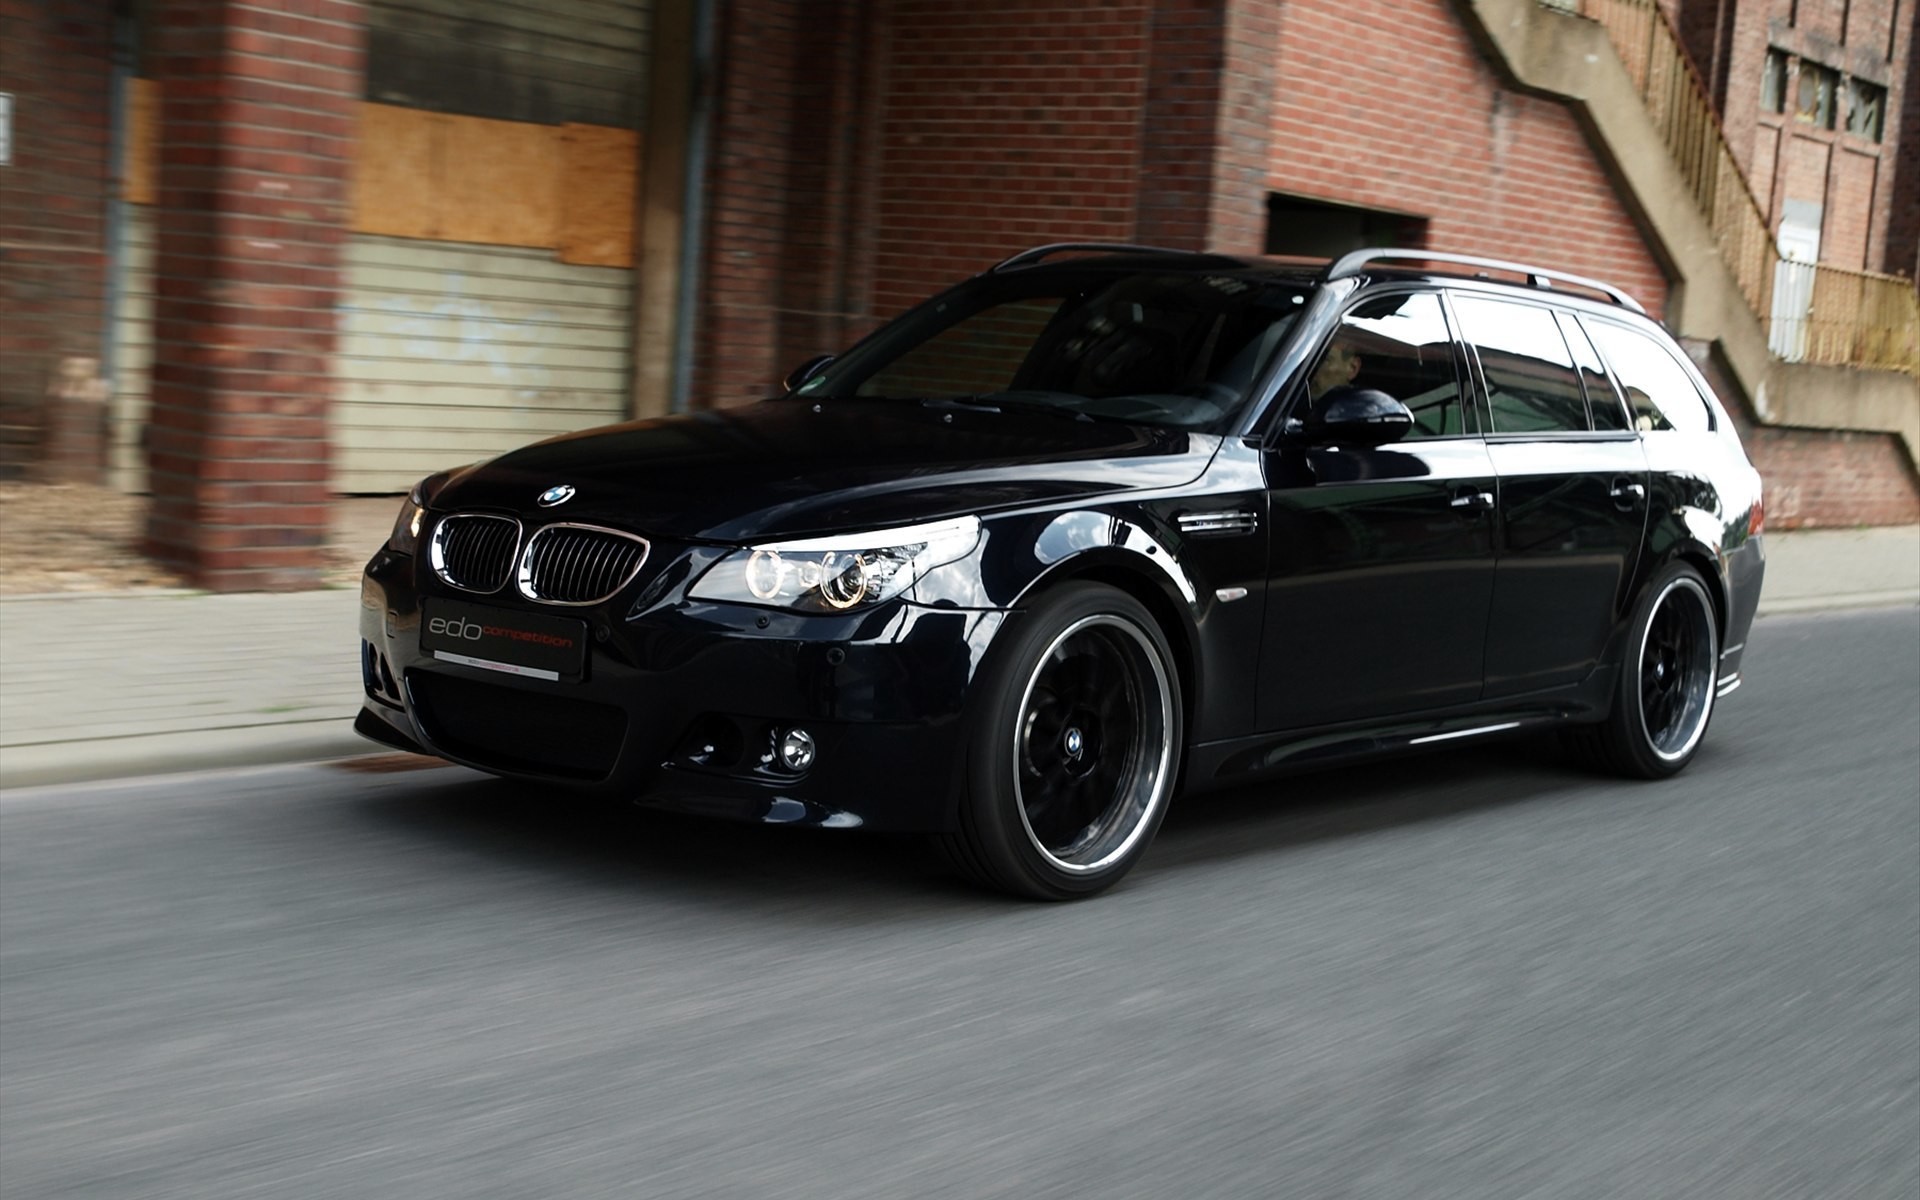 Glossy black BMW M5 Dark Edition on pavement in motion